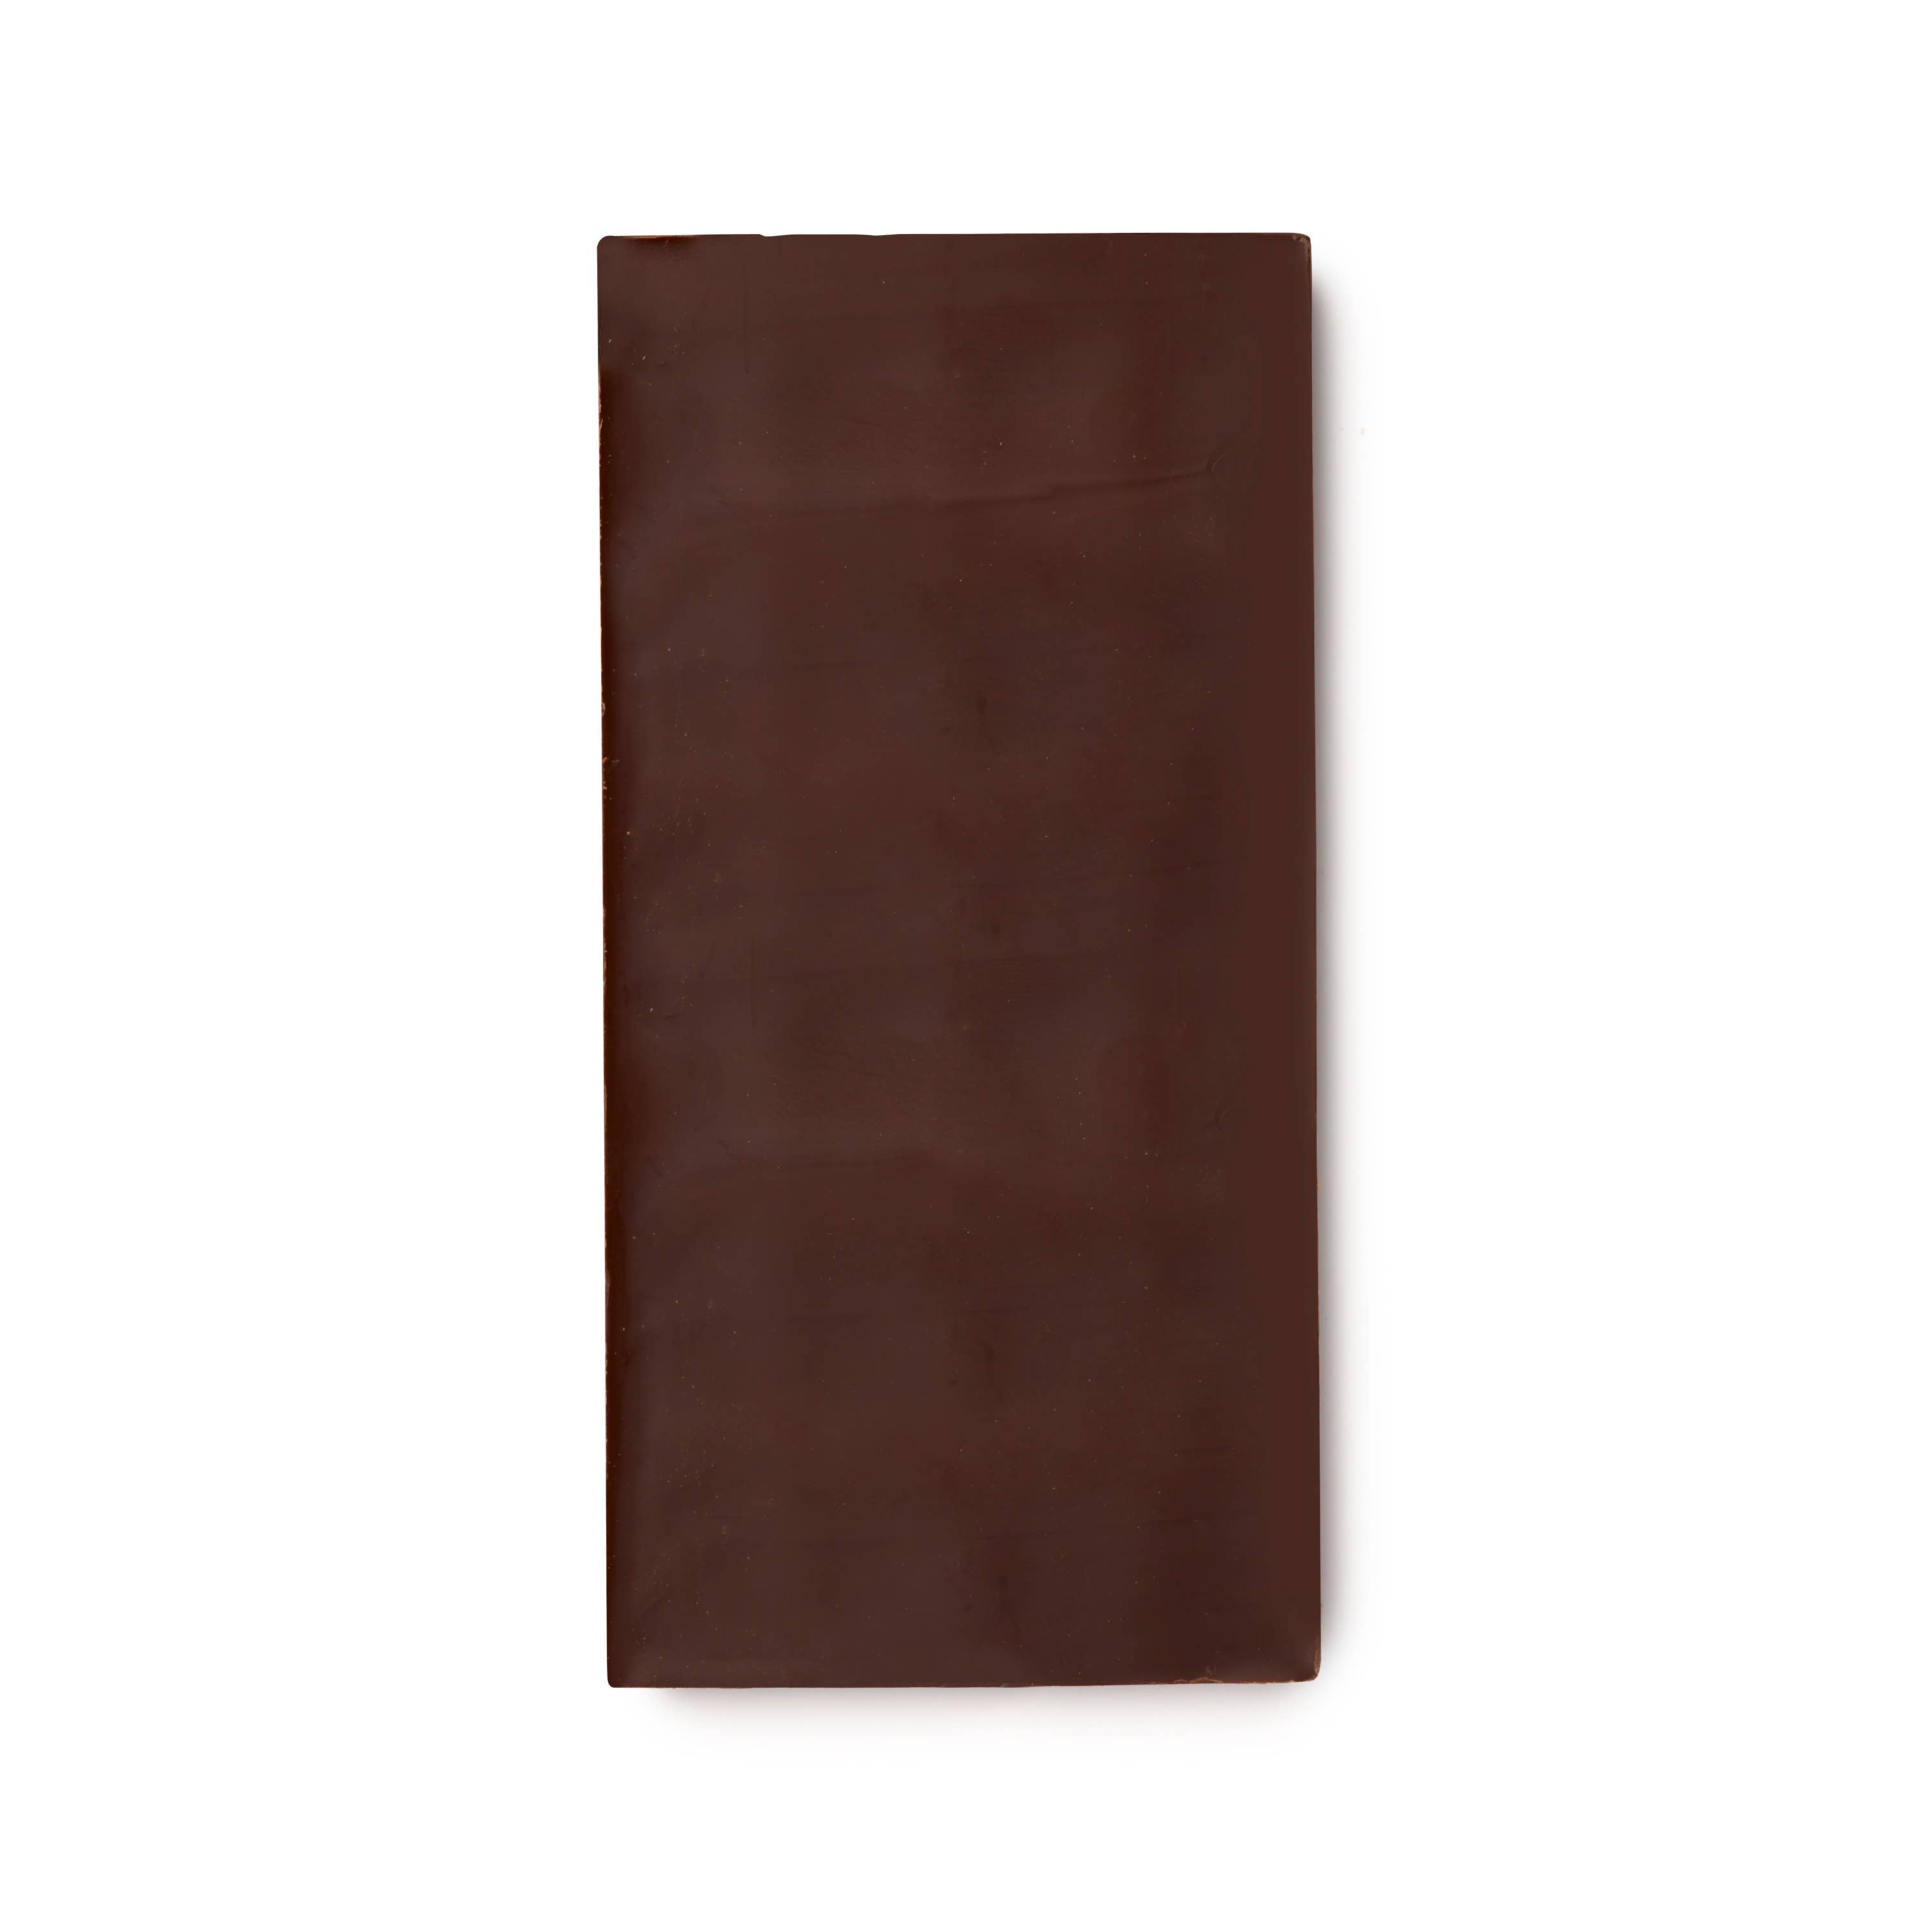 Marmalade Chocolate Bar